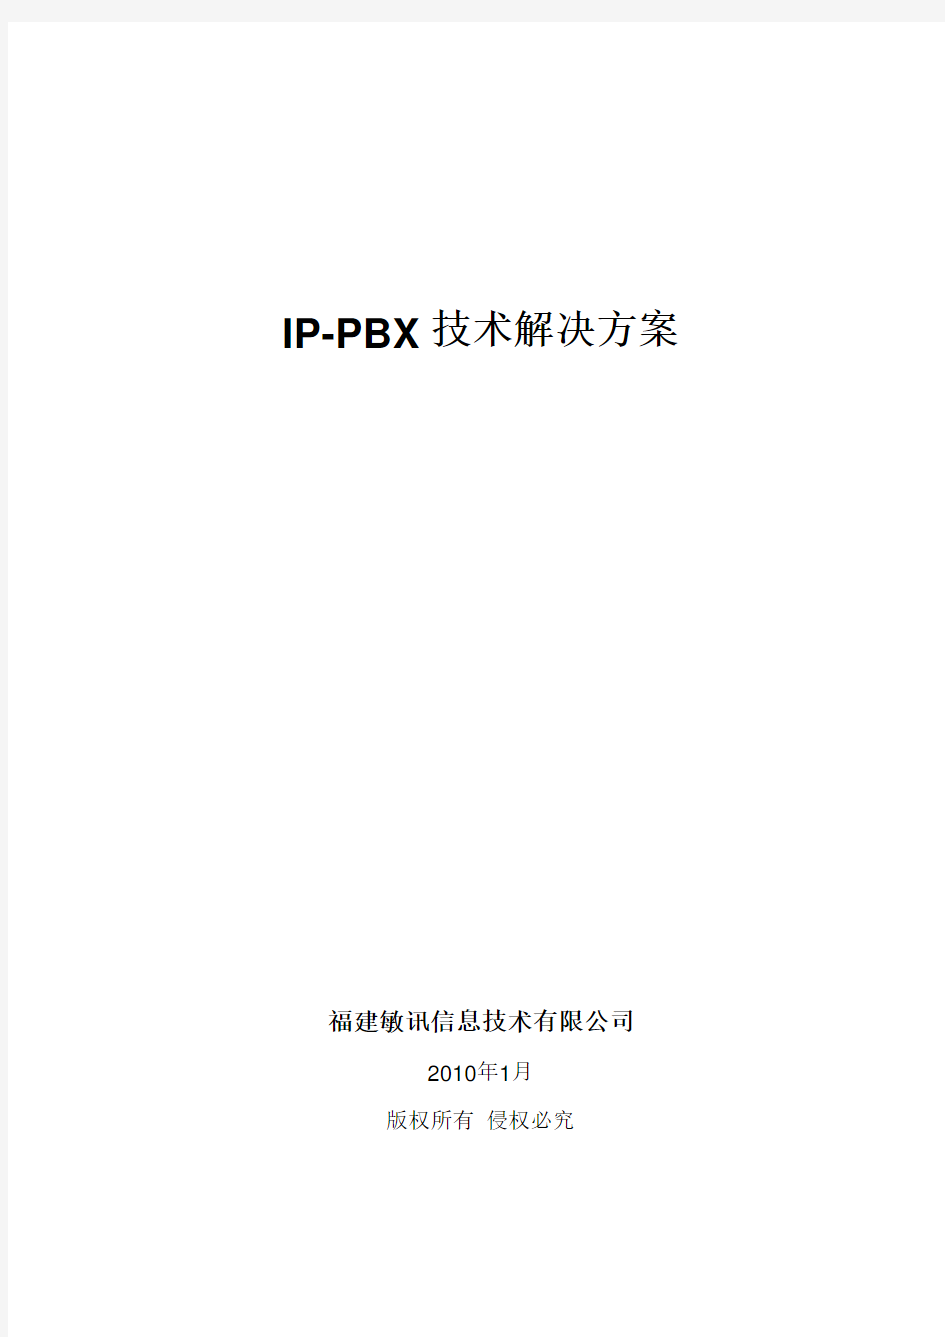 IPPBX技术组网方案敏讯